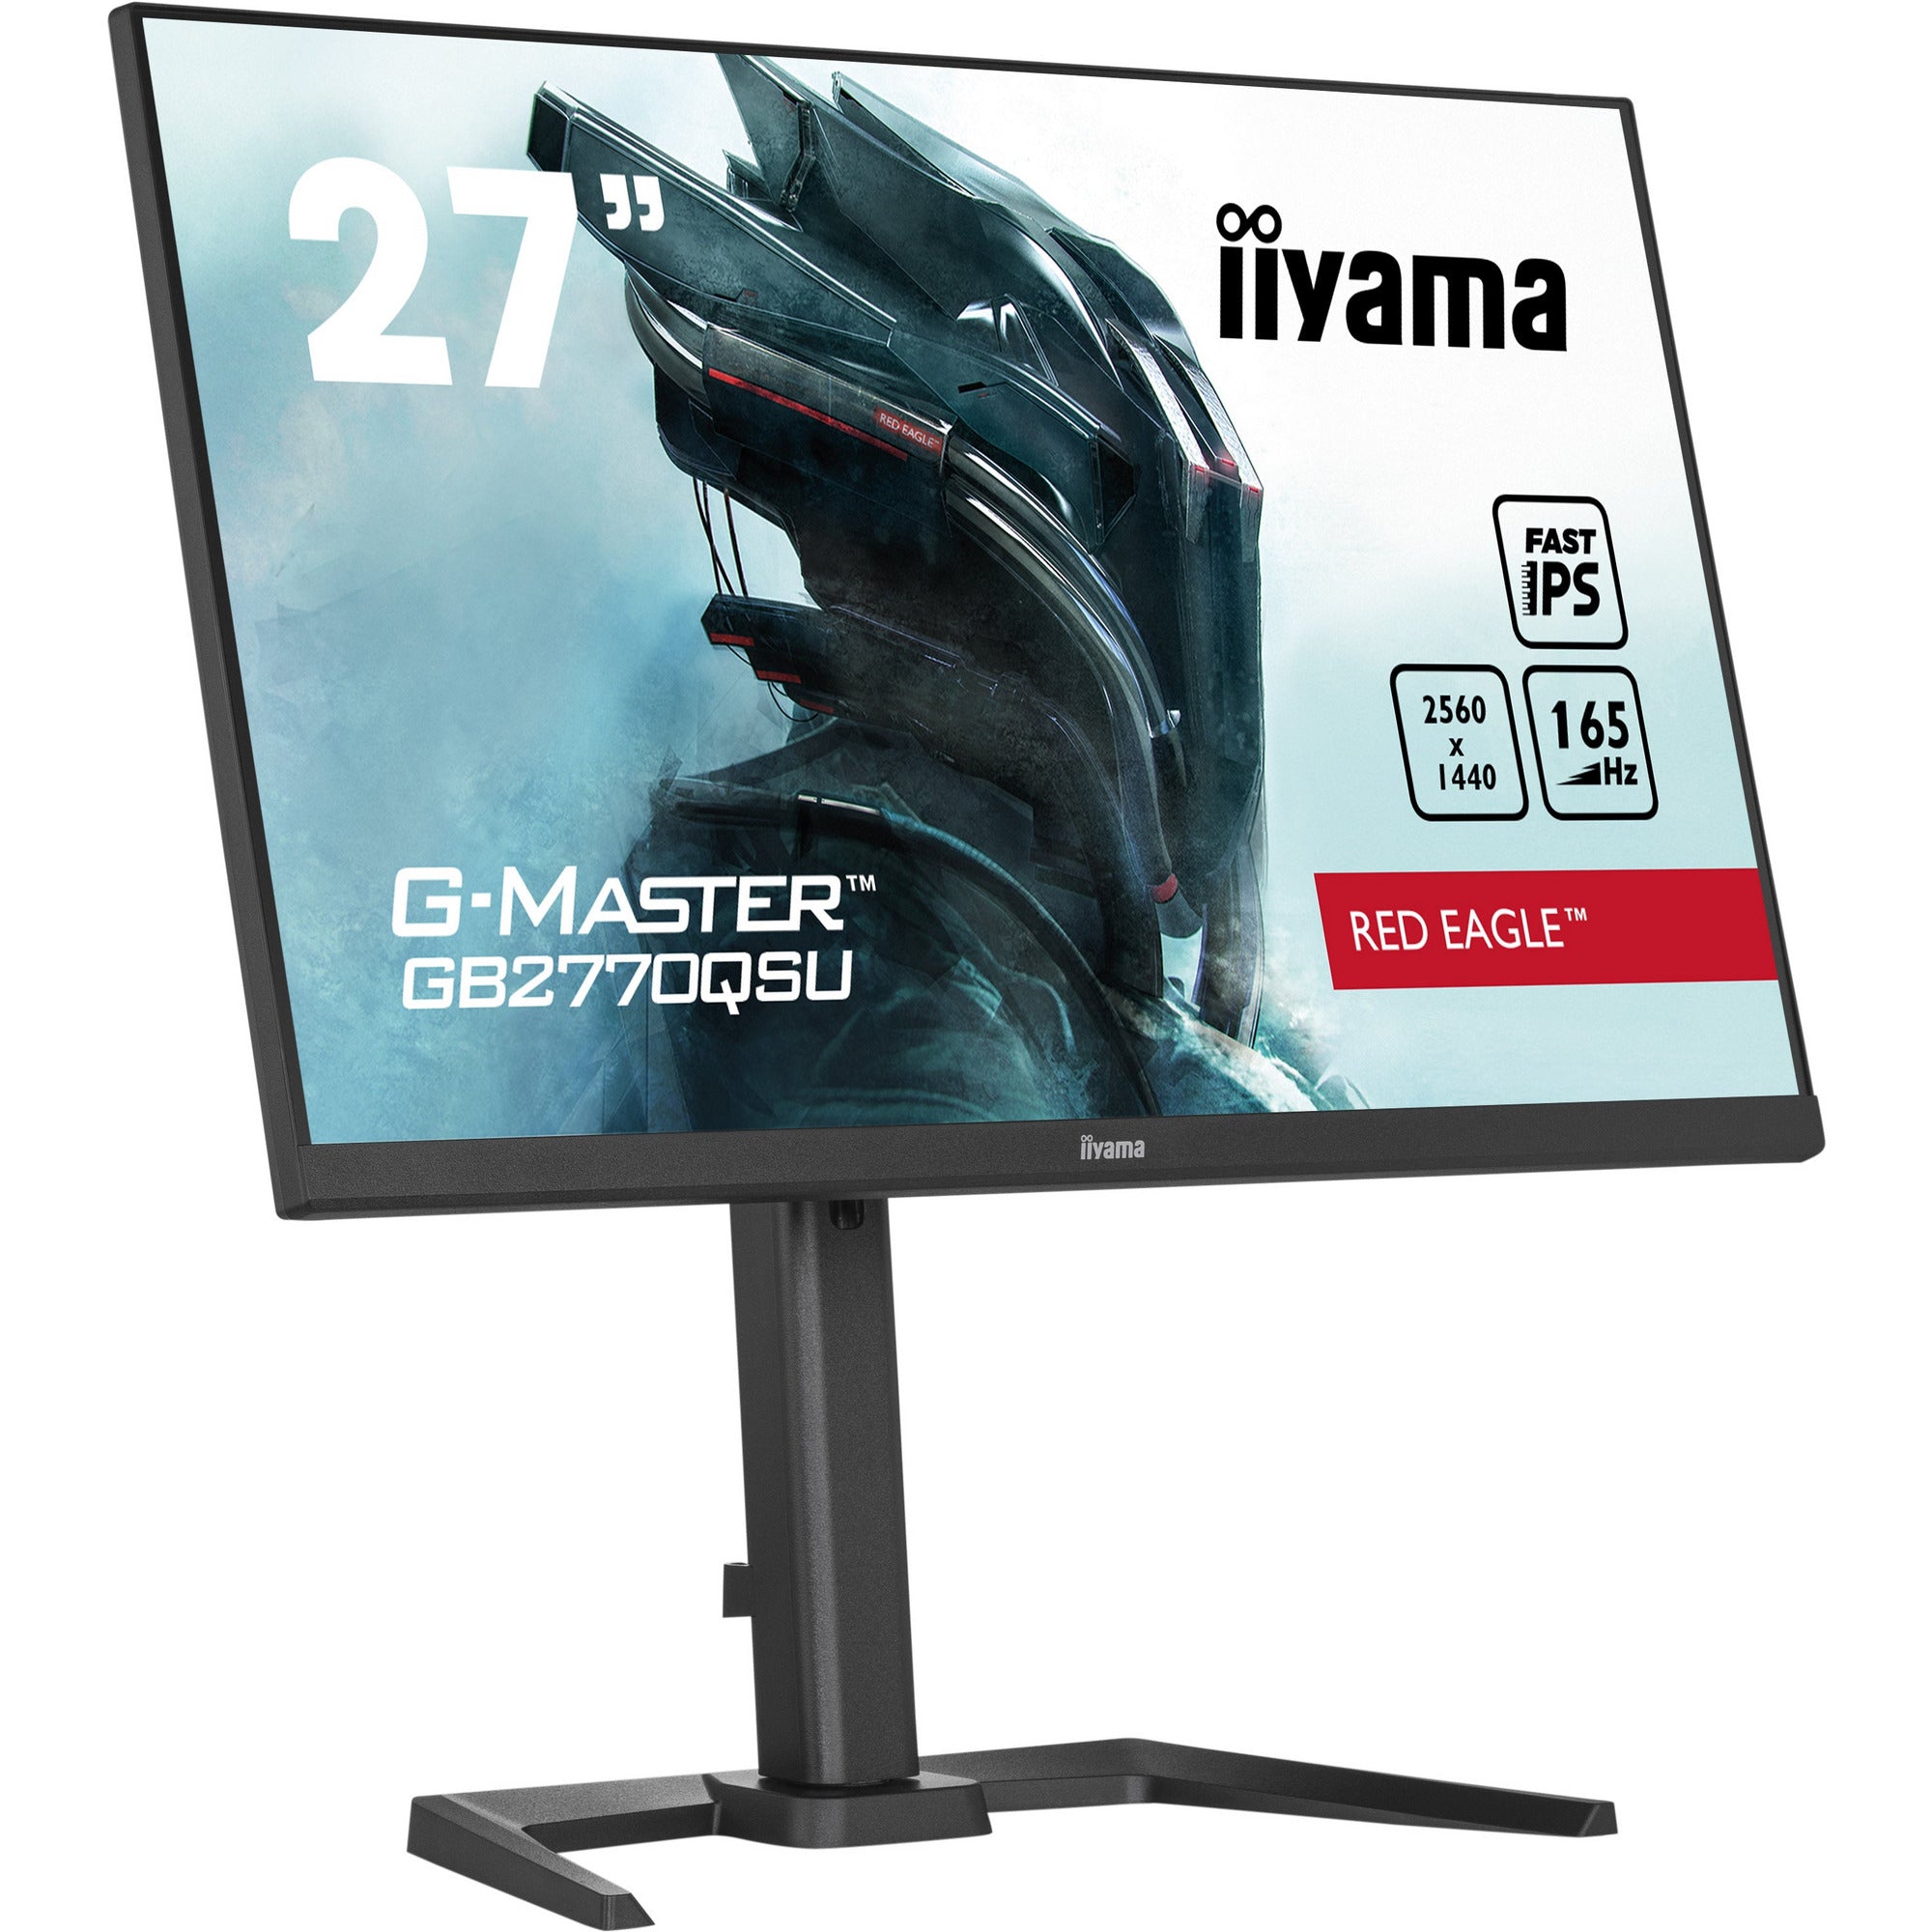 iiyama G-Master GB2770QSU-B5 27" Fast IPS WQHD 2560 x 1400 Red Eagle Gaming Monitor